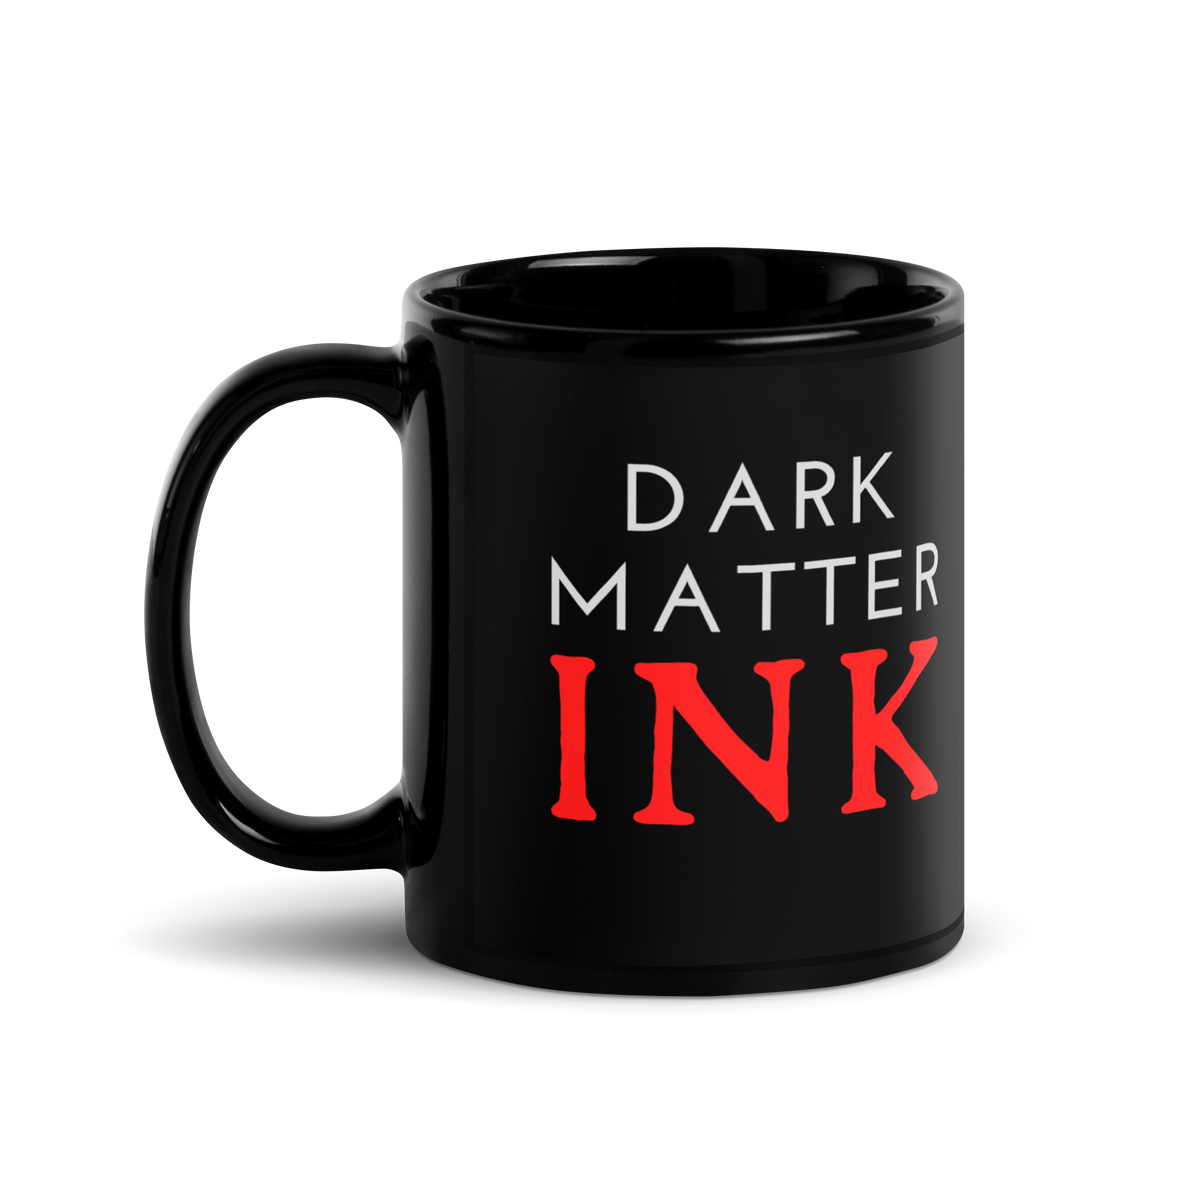 "Dark Matter INK" 11oz Black Ceramic Mug